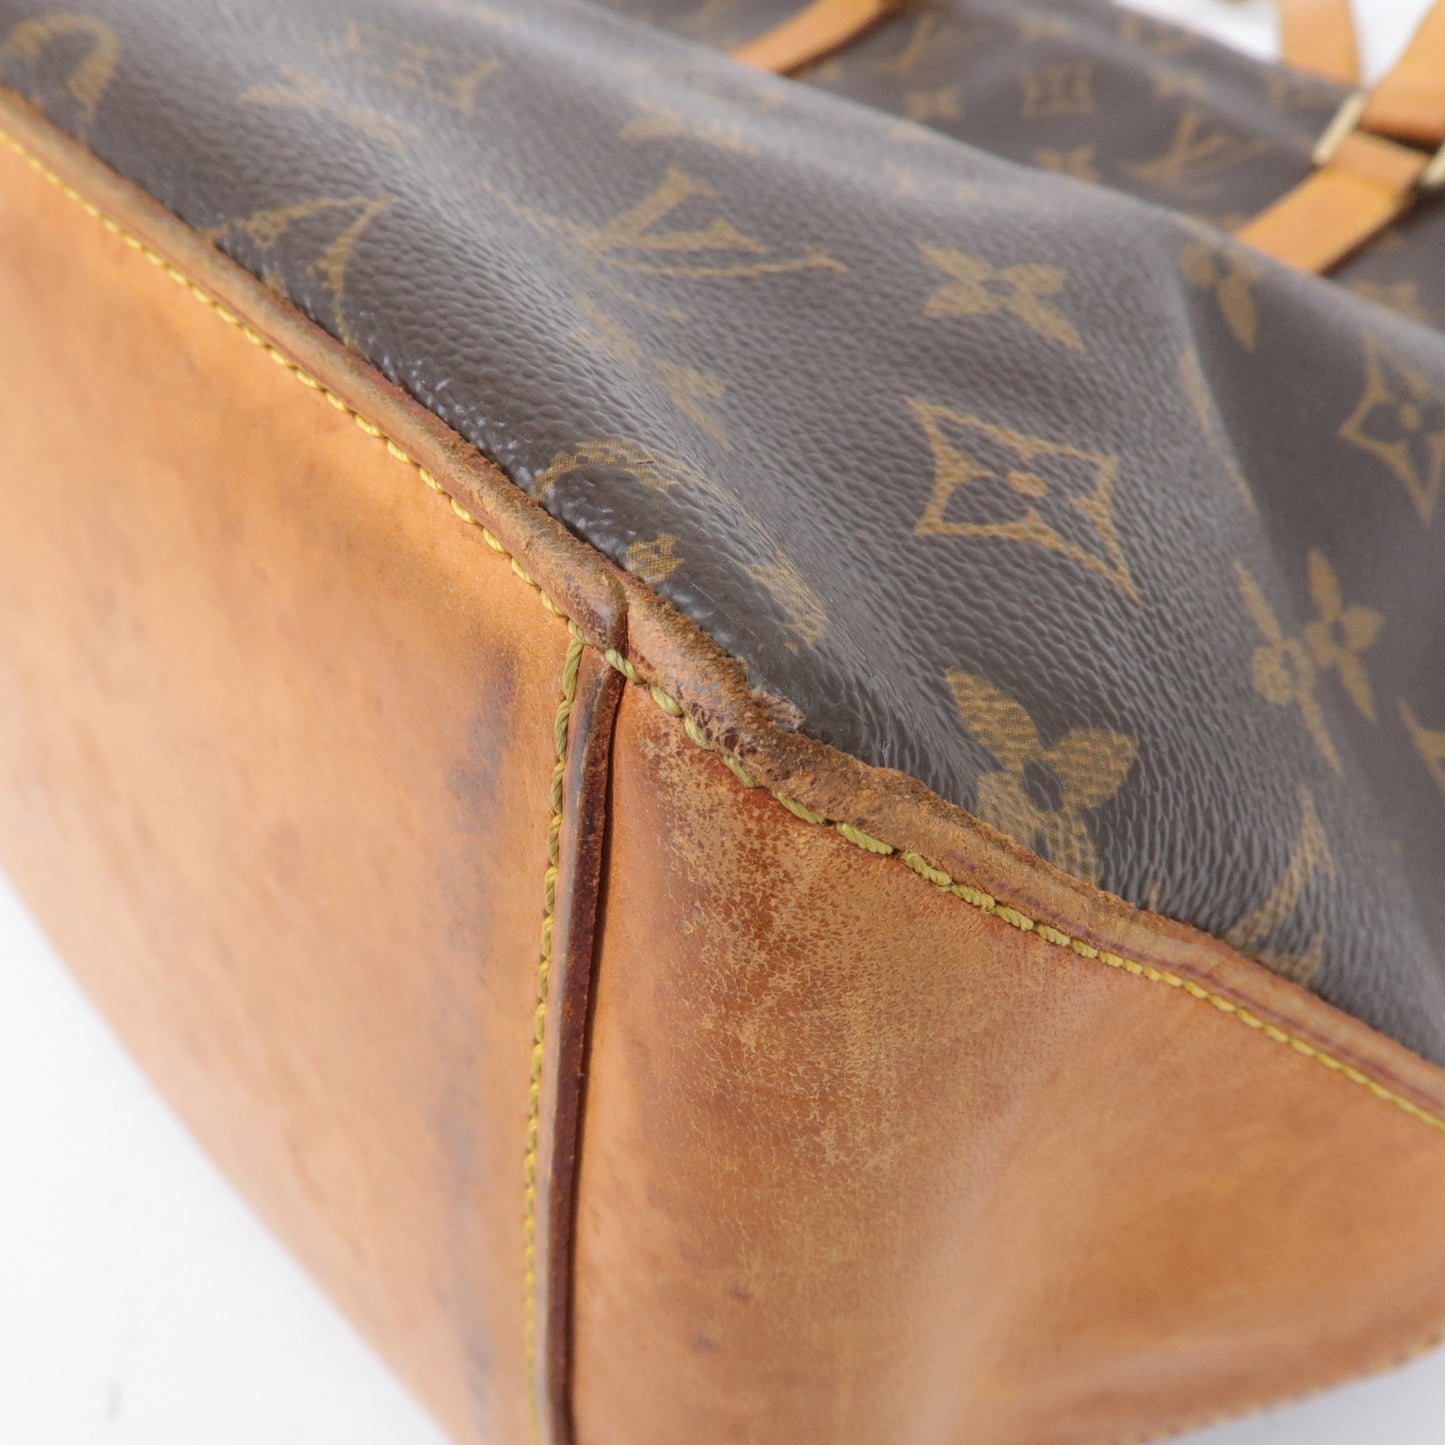 Louis Vuitton Monogram Cabas Mezzo Tote Bag Brown M51151